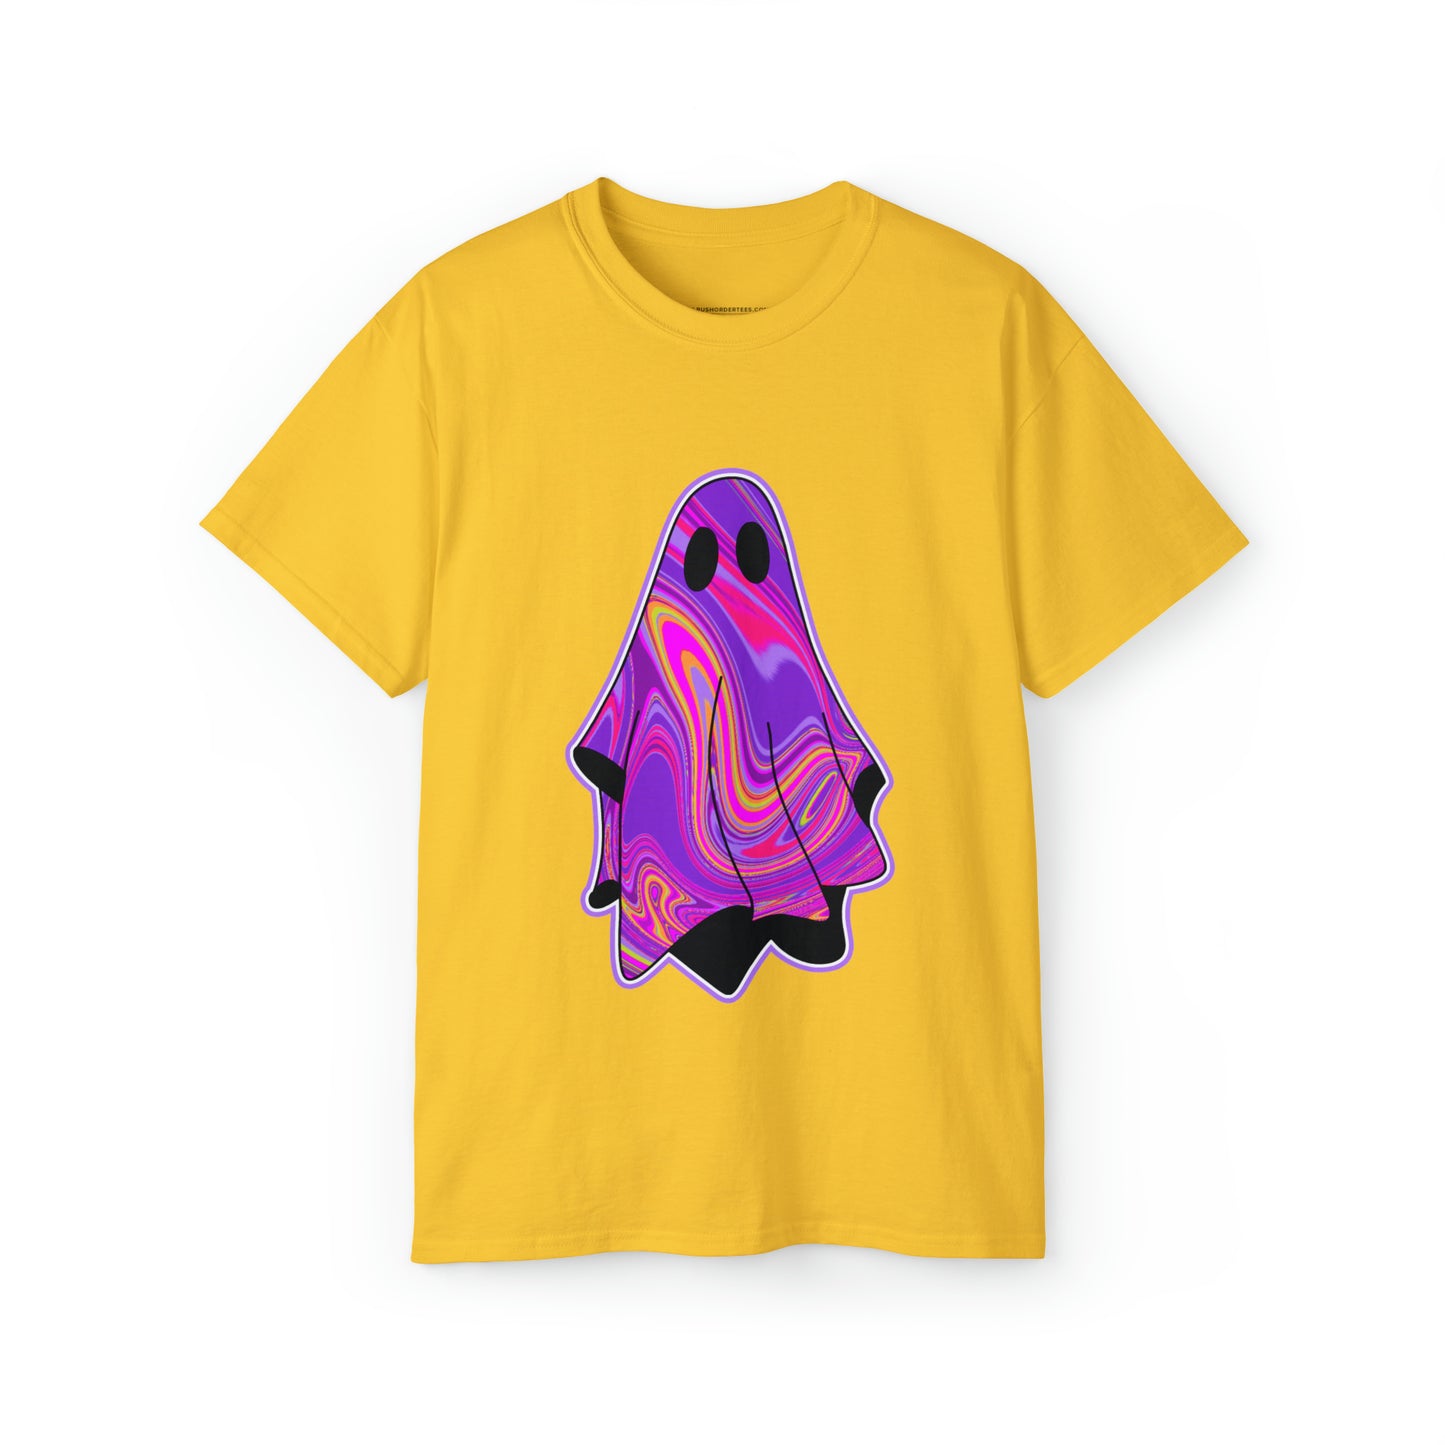 Groovy Ghost Graphic T-Shirt, Spooky Season Shirt